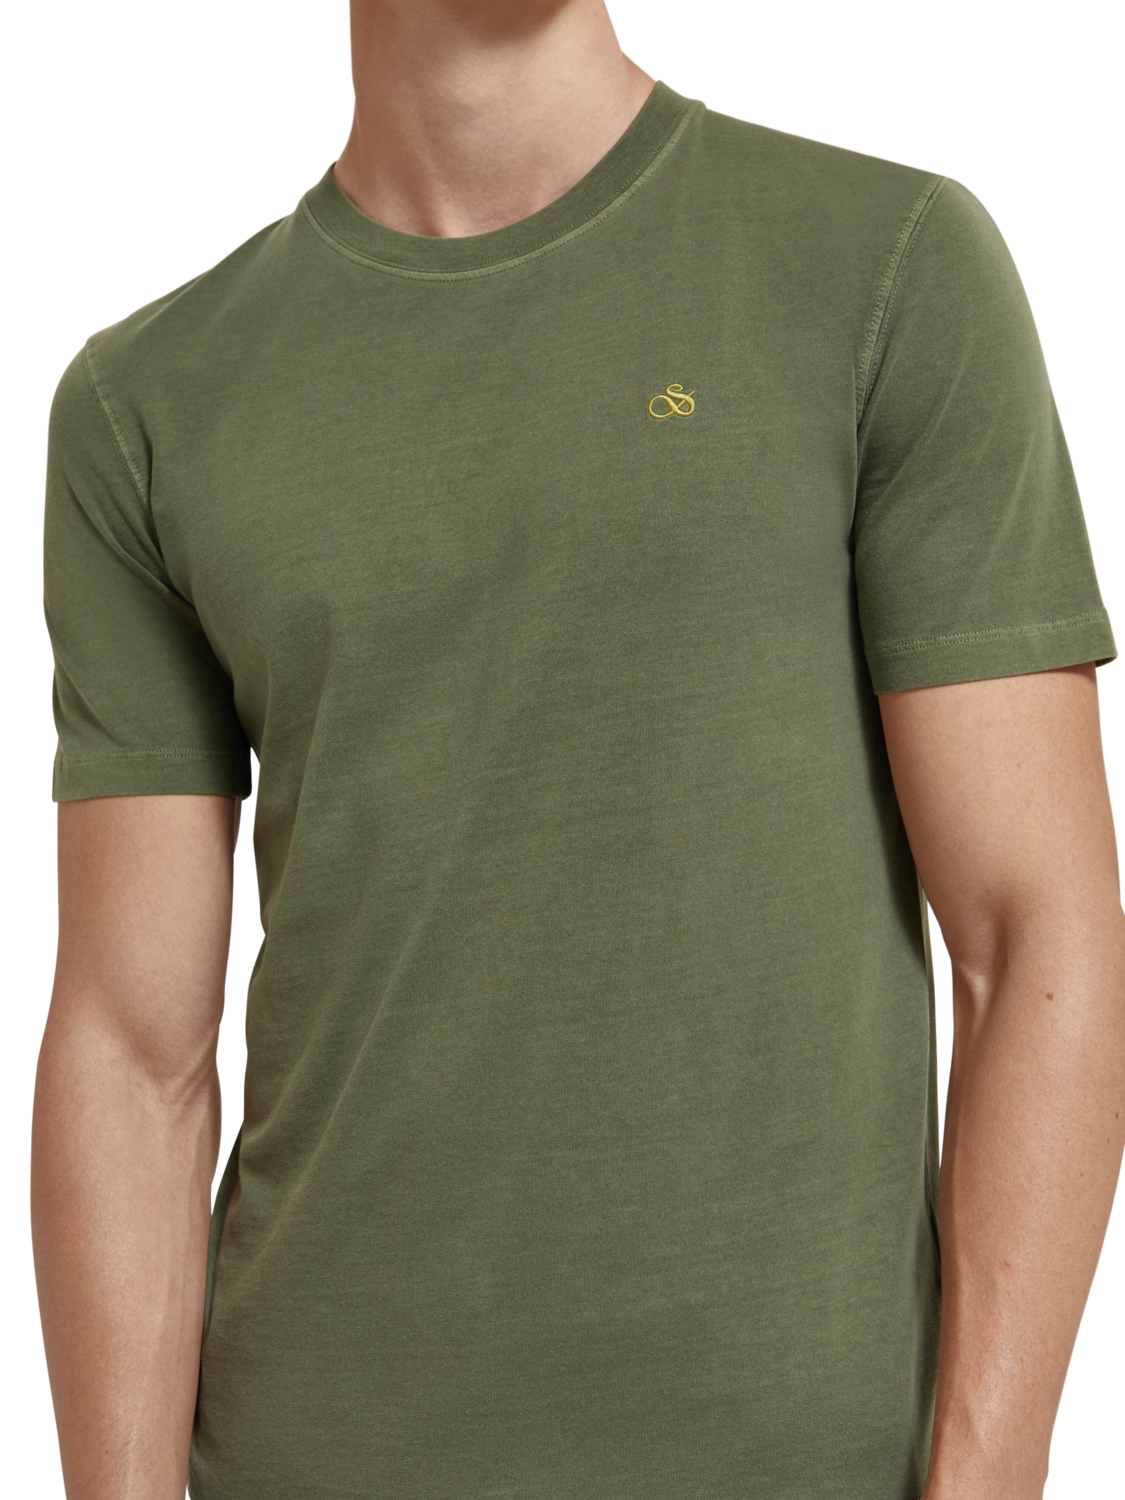 Scotch & Soda - Logo T-Shirt - Twilight or Field Green